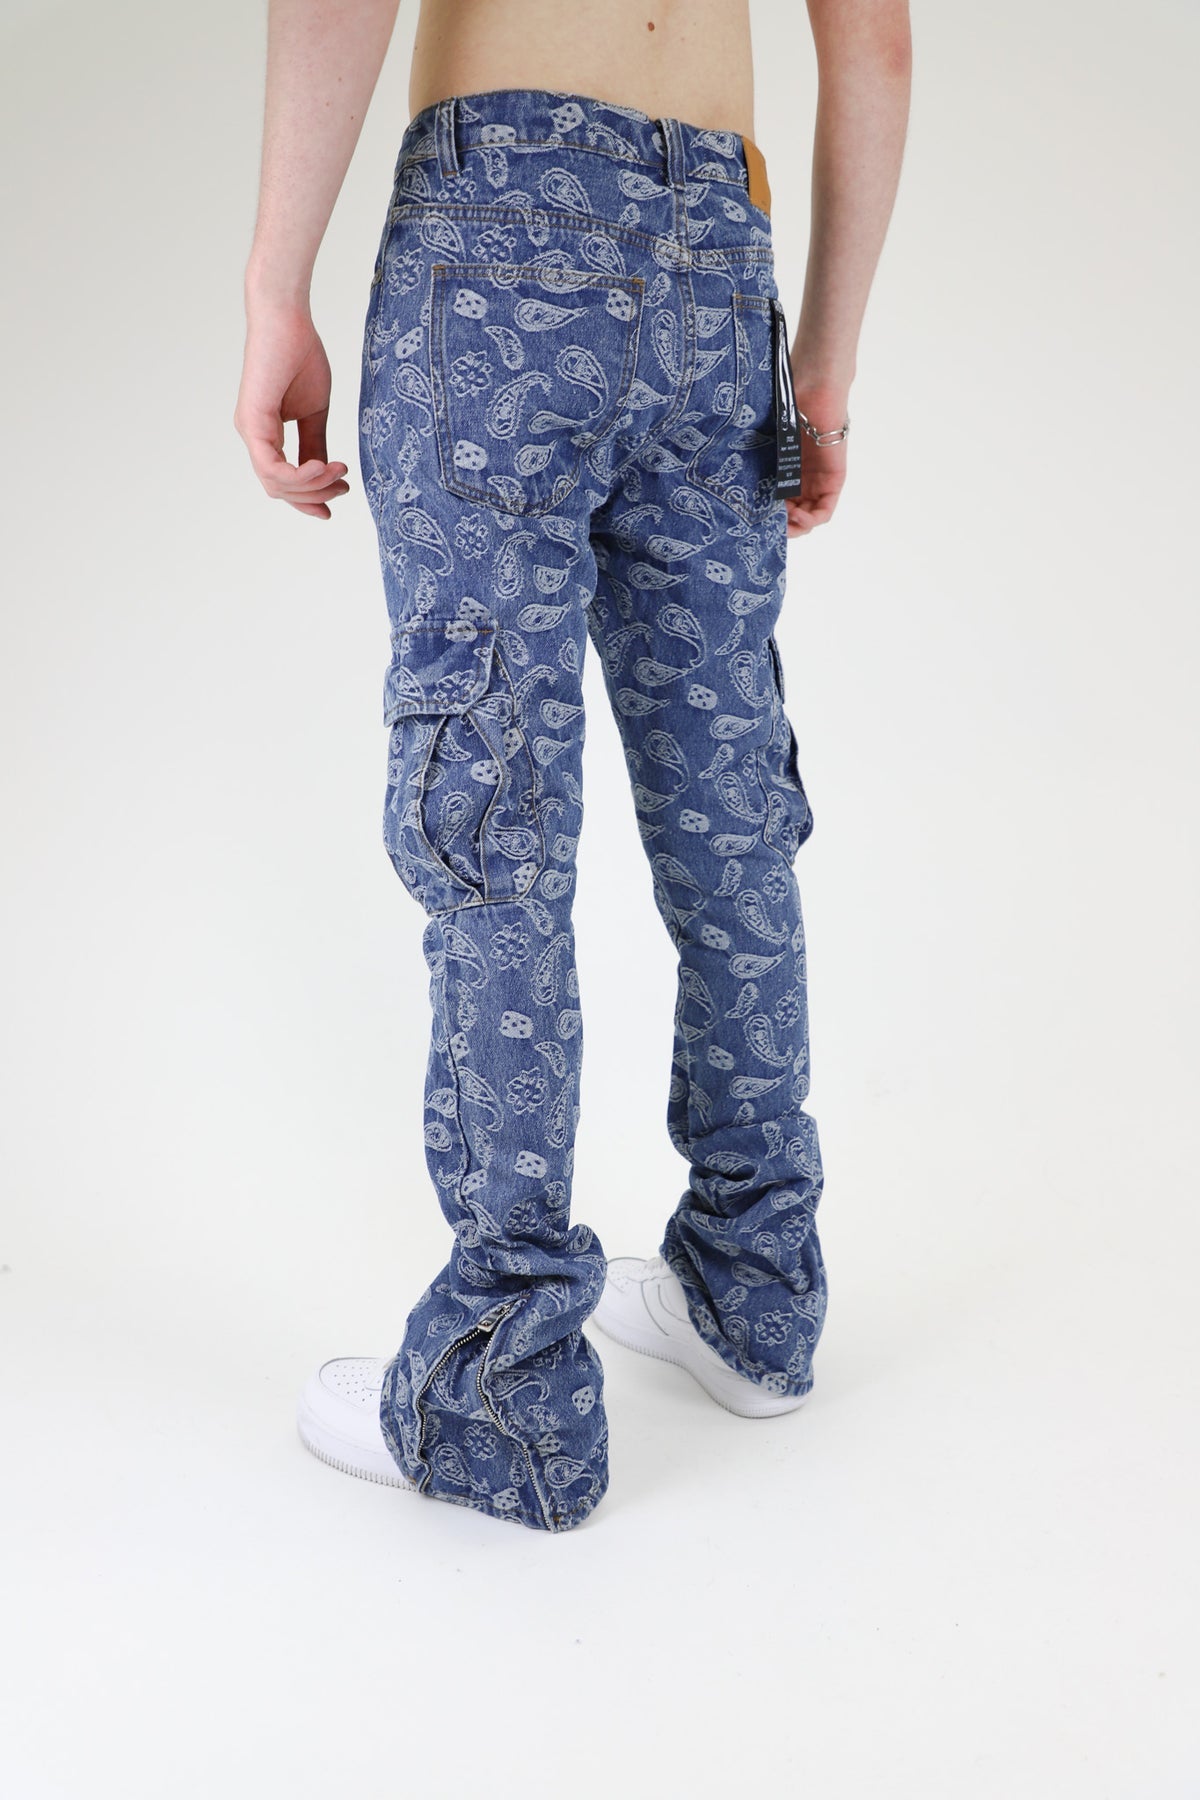 Armor Jeans - Blue Bandana Stacked - Clique Apparel